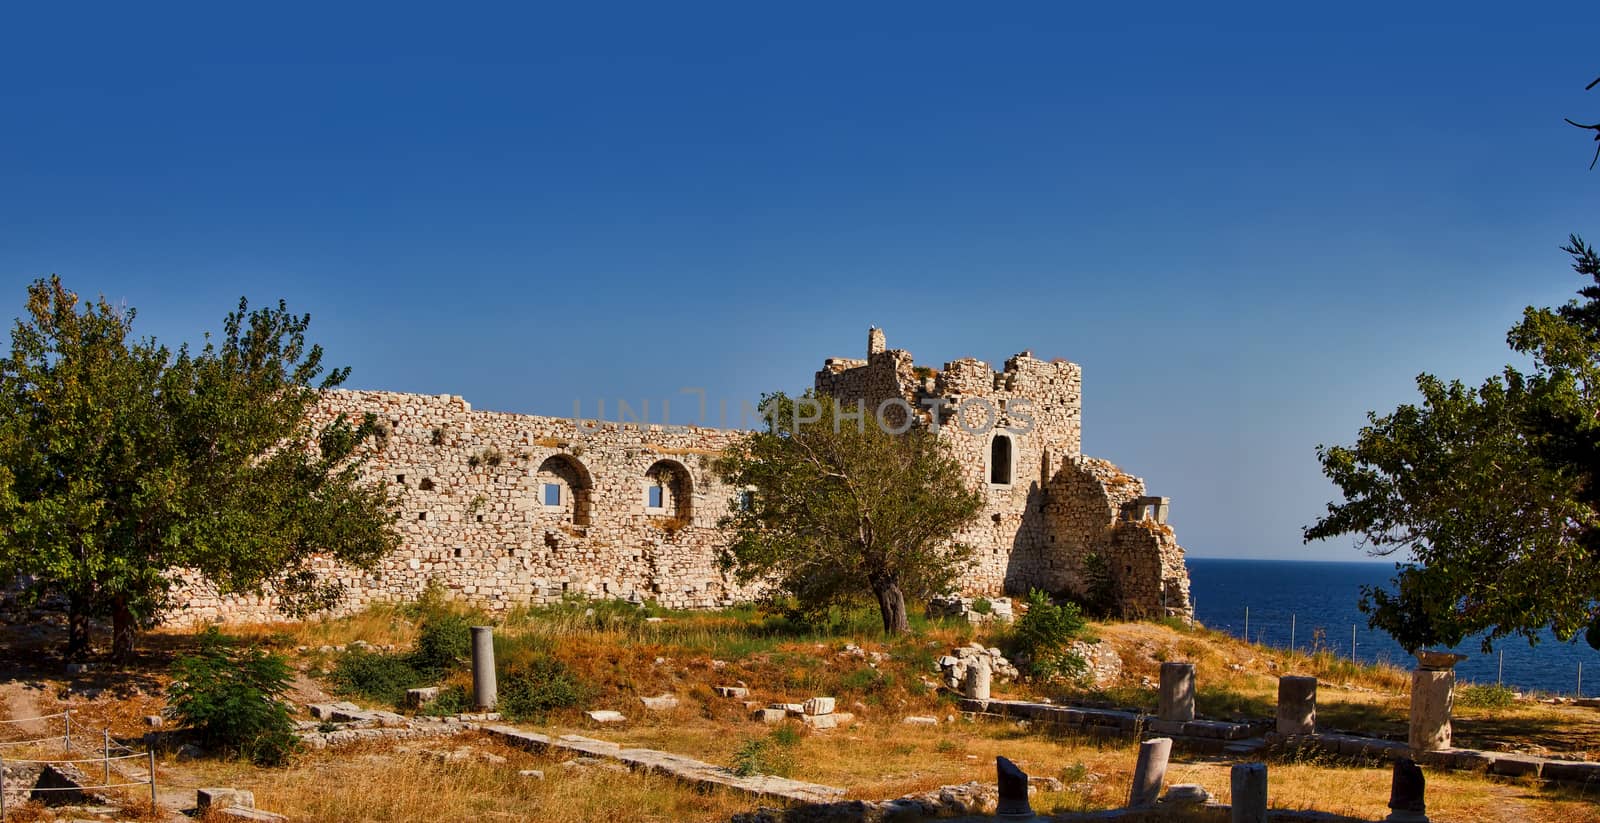 The Logothetis Castle in Samos by huntz